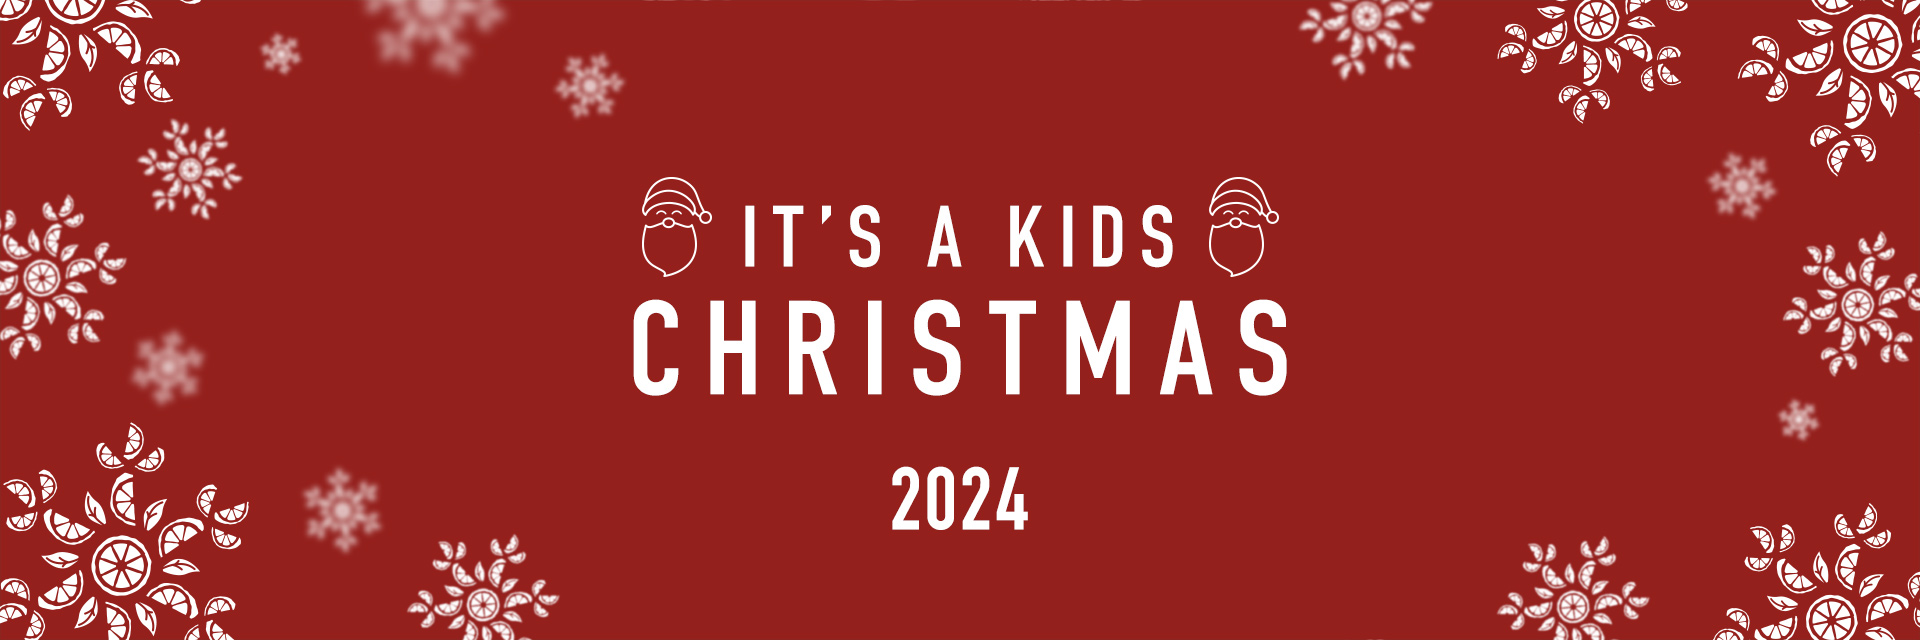 Kids Christmas Menu 2024 at The Cooper Dean